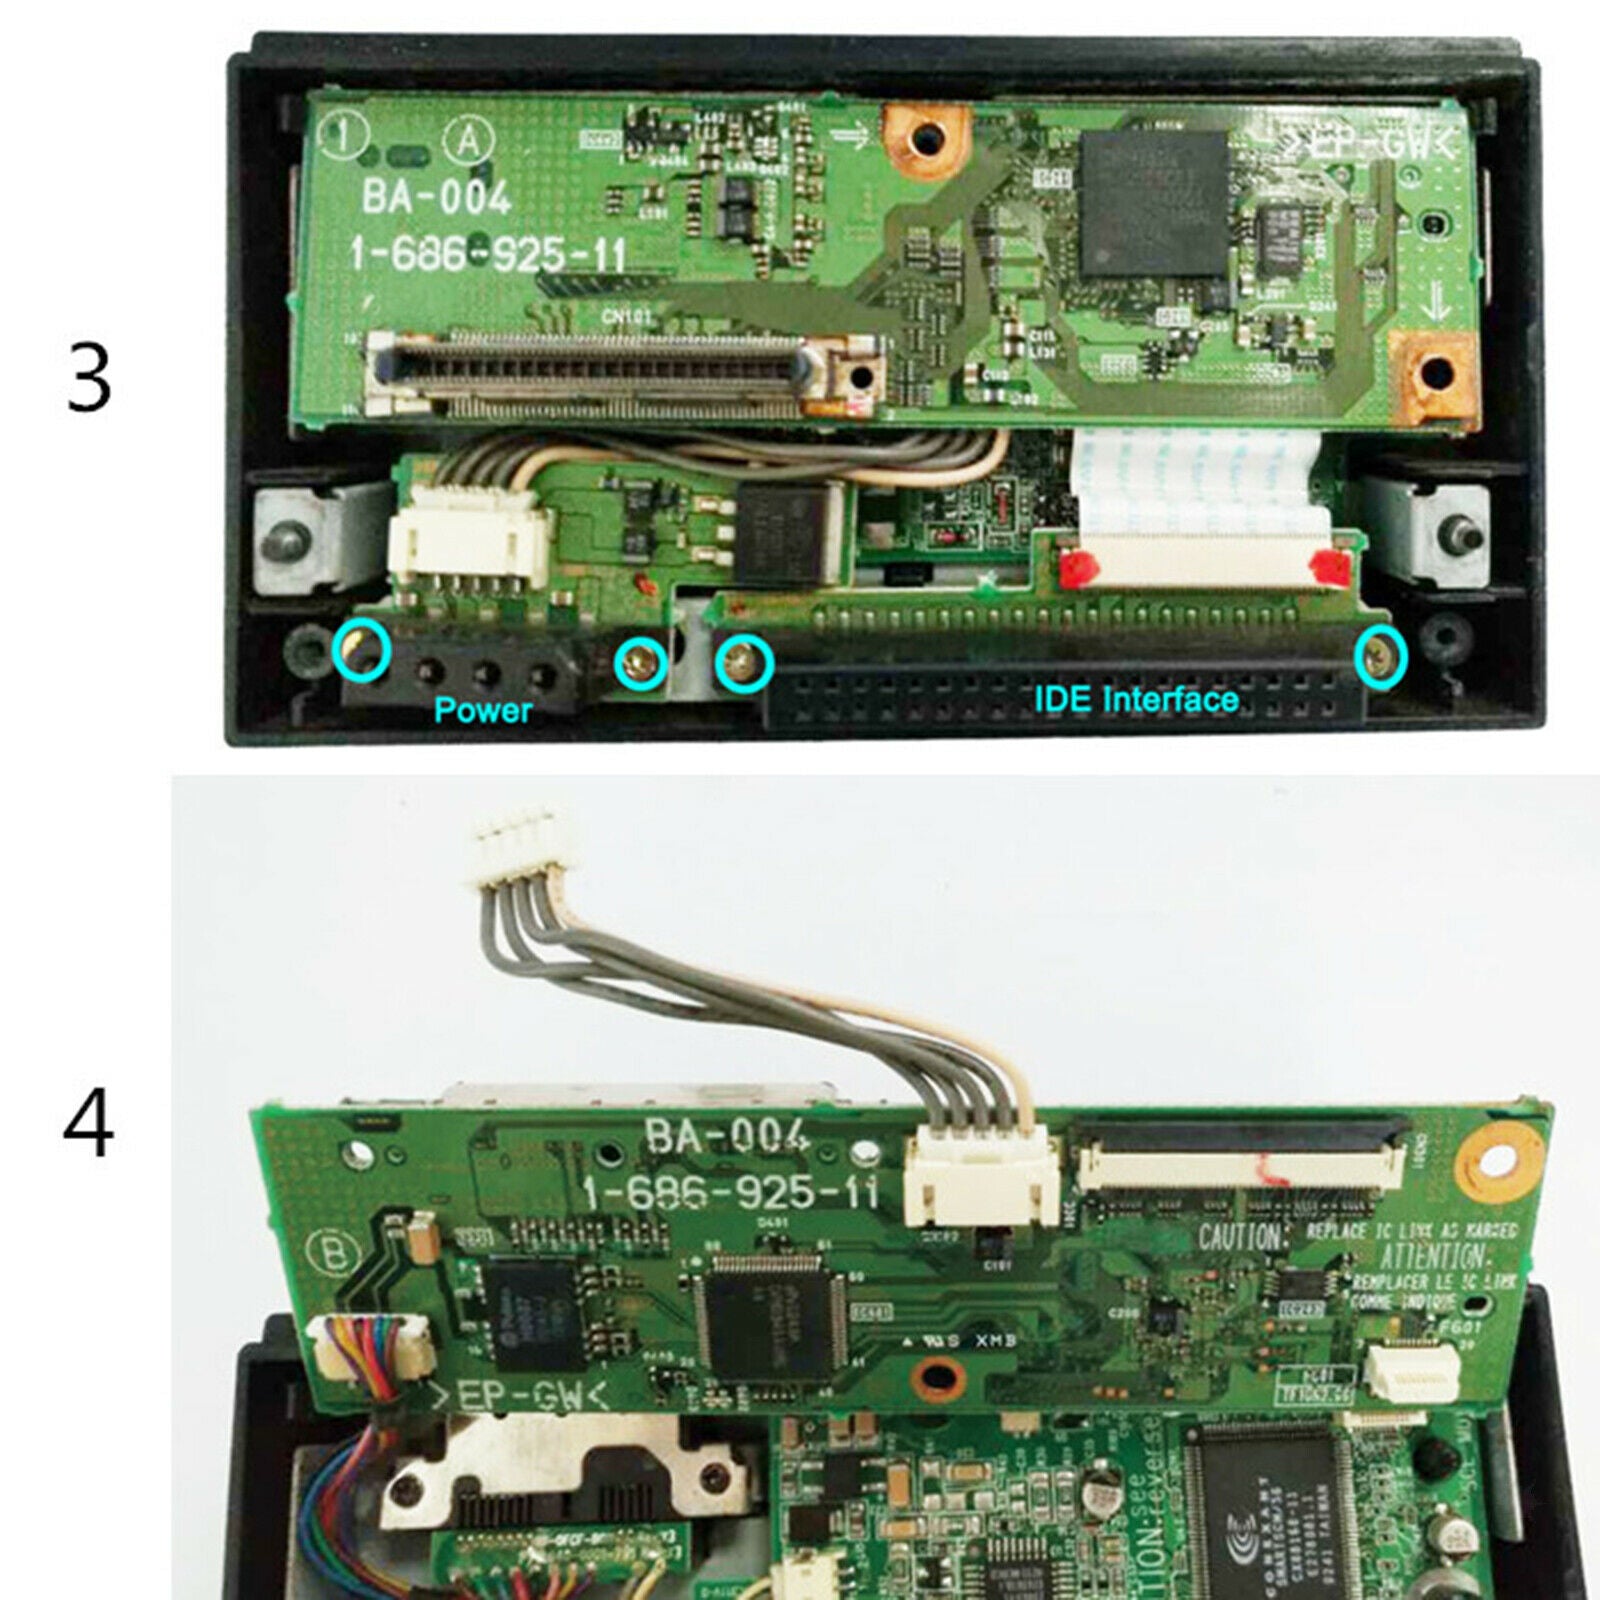 SATA Adapter Adaptor Board Converter Set Replacement for PS2 Durable Premium